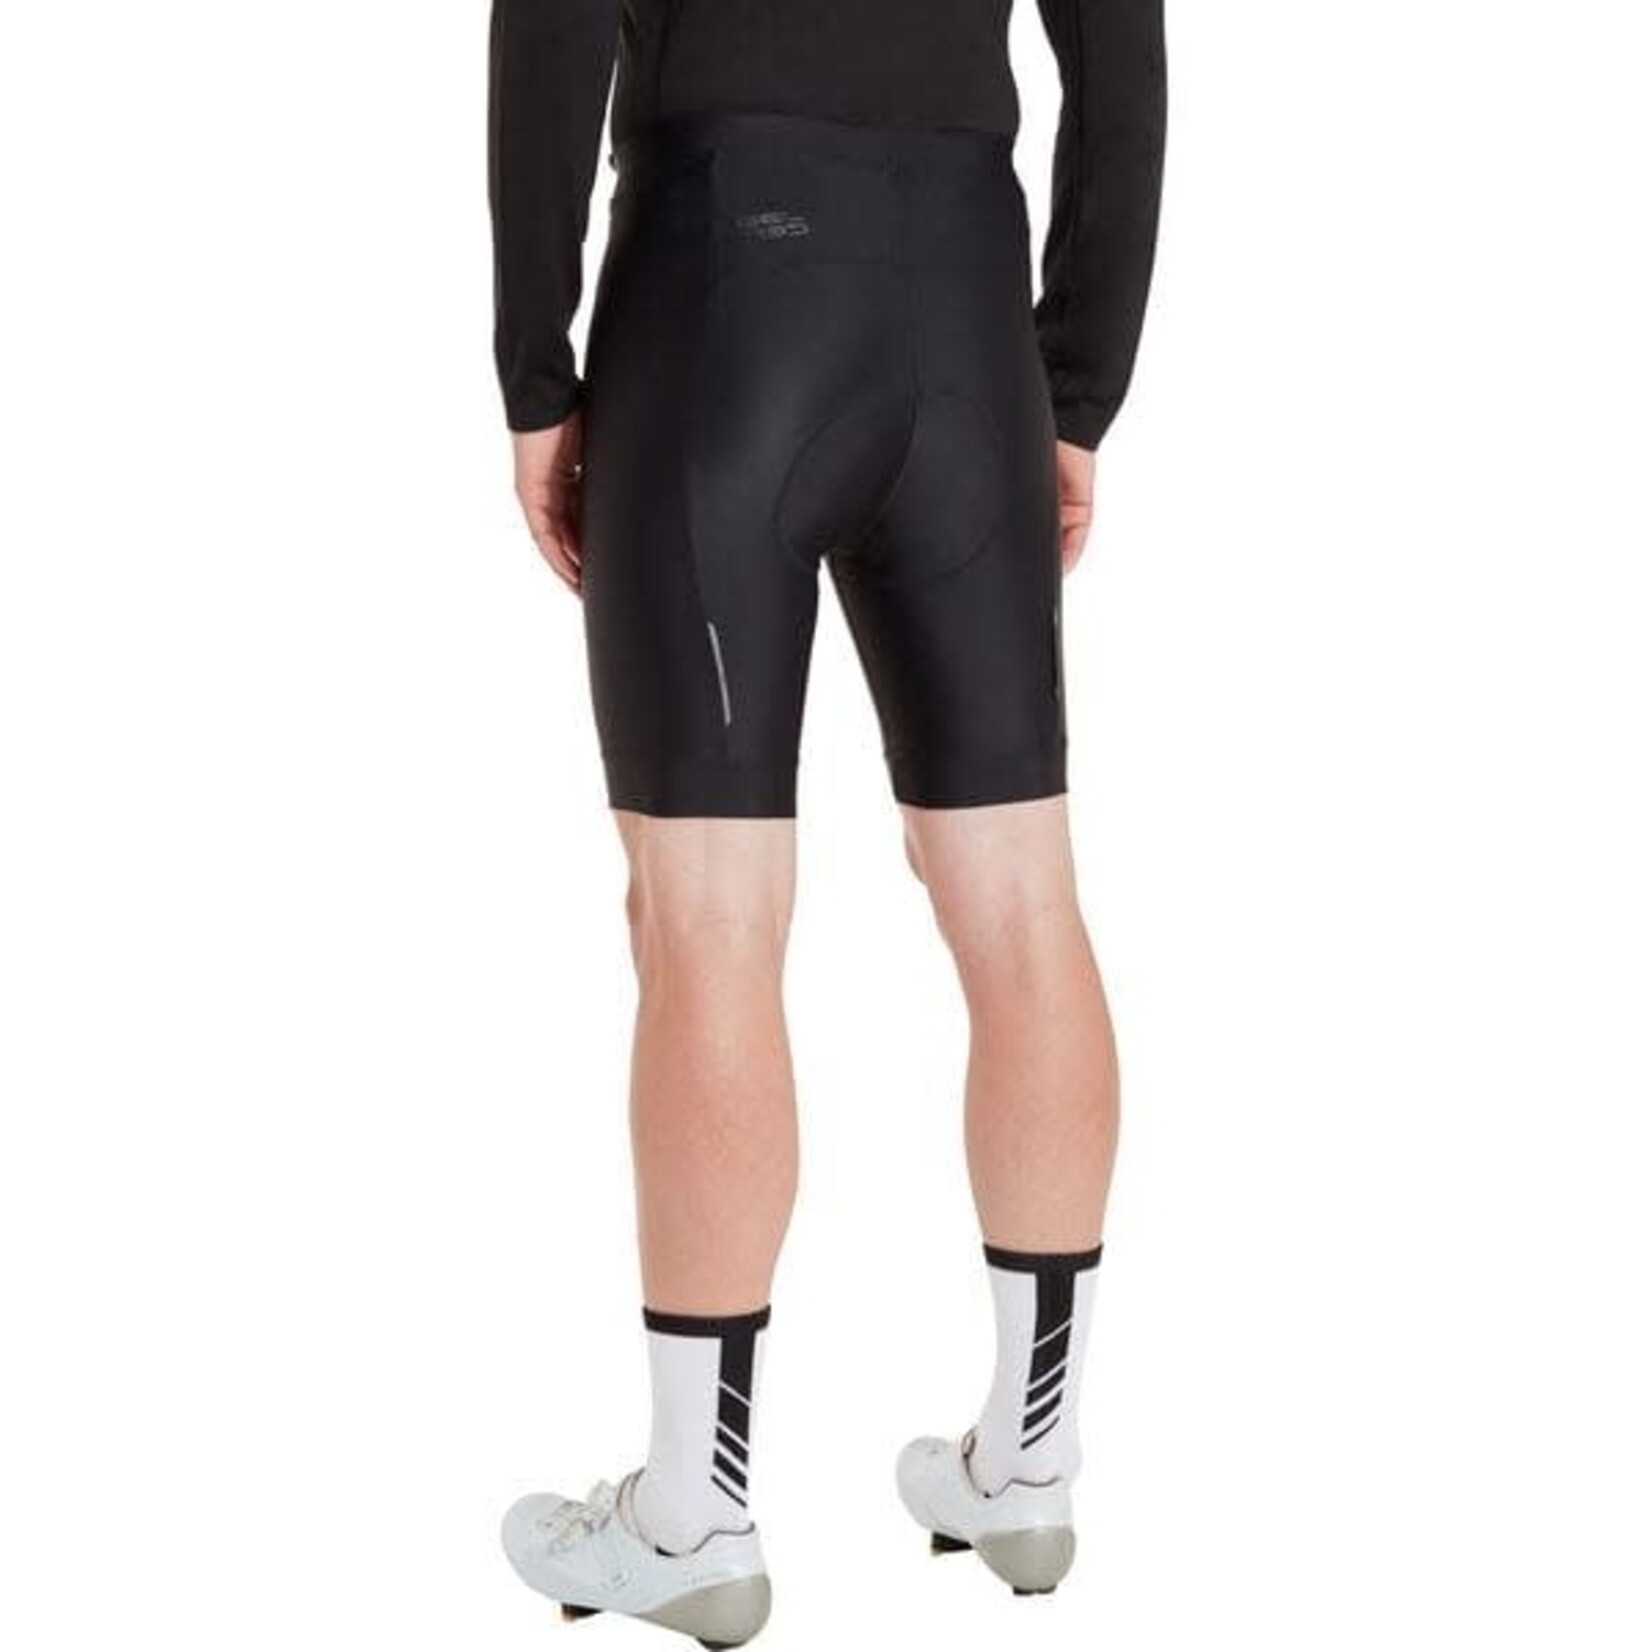 Madison Madison Sportive men's shorts